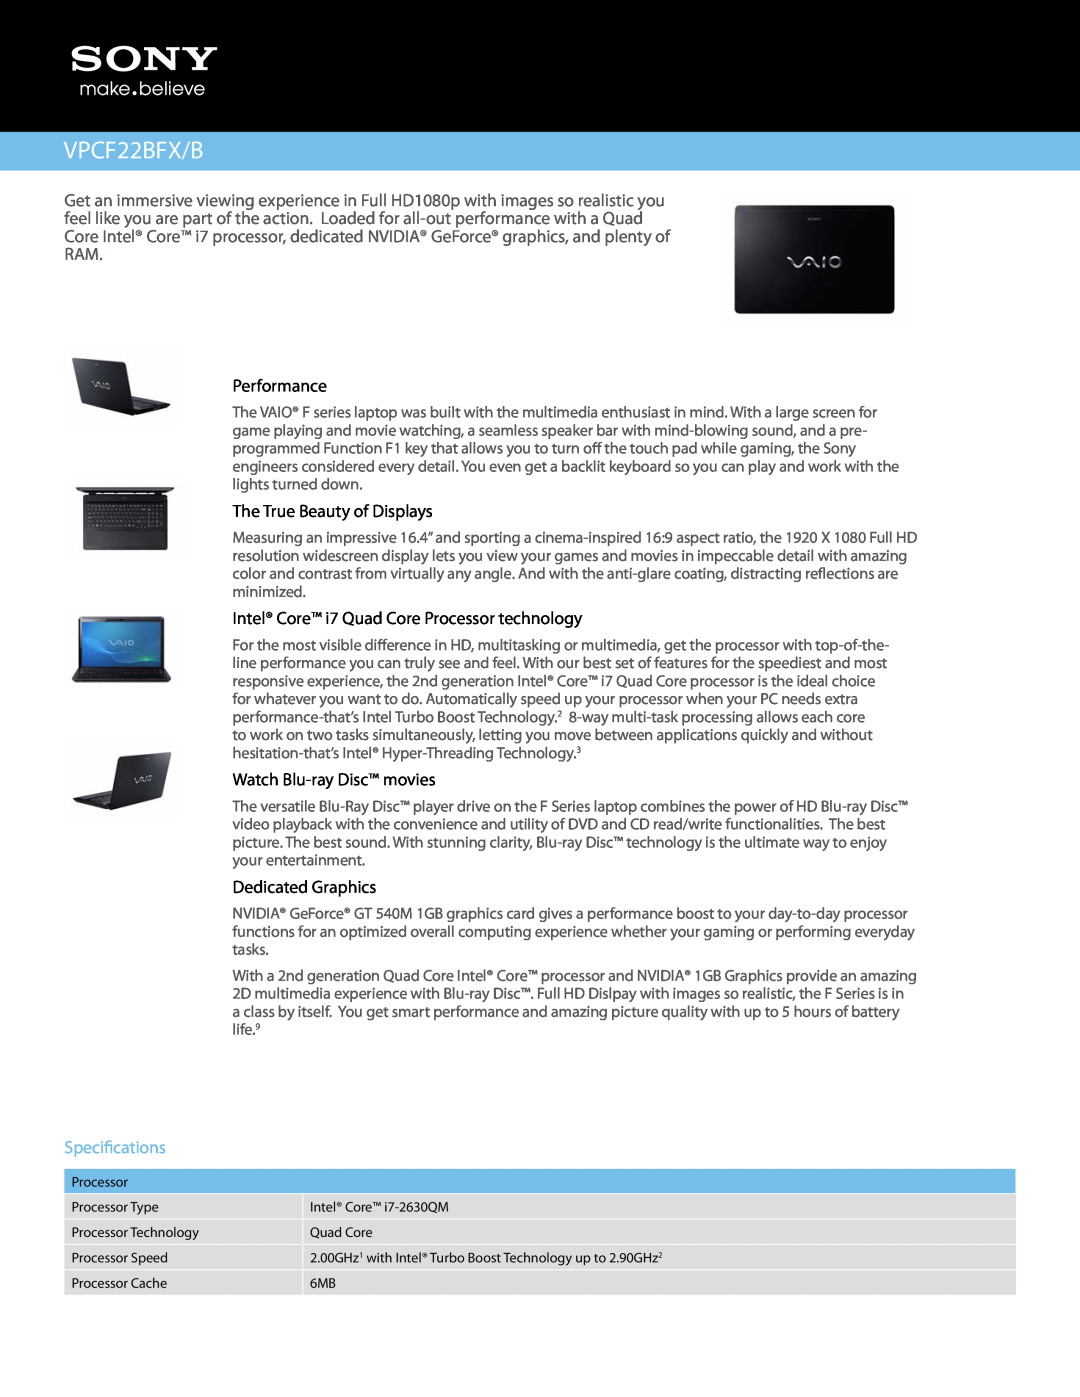 Sony VPCF22BFX/B manual Performance, The True Beauty of Displays, Intel Core i7 Quad Core Processor technology 